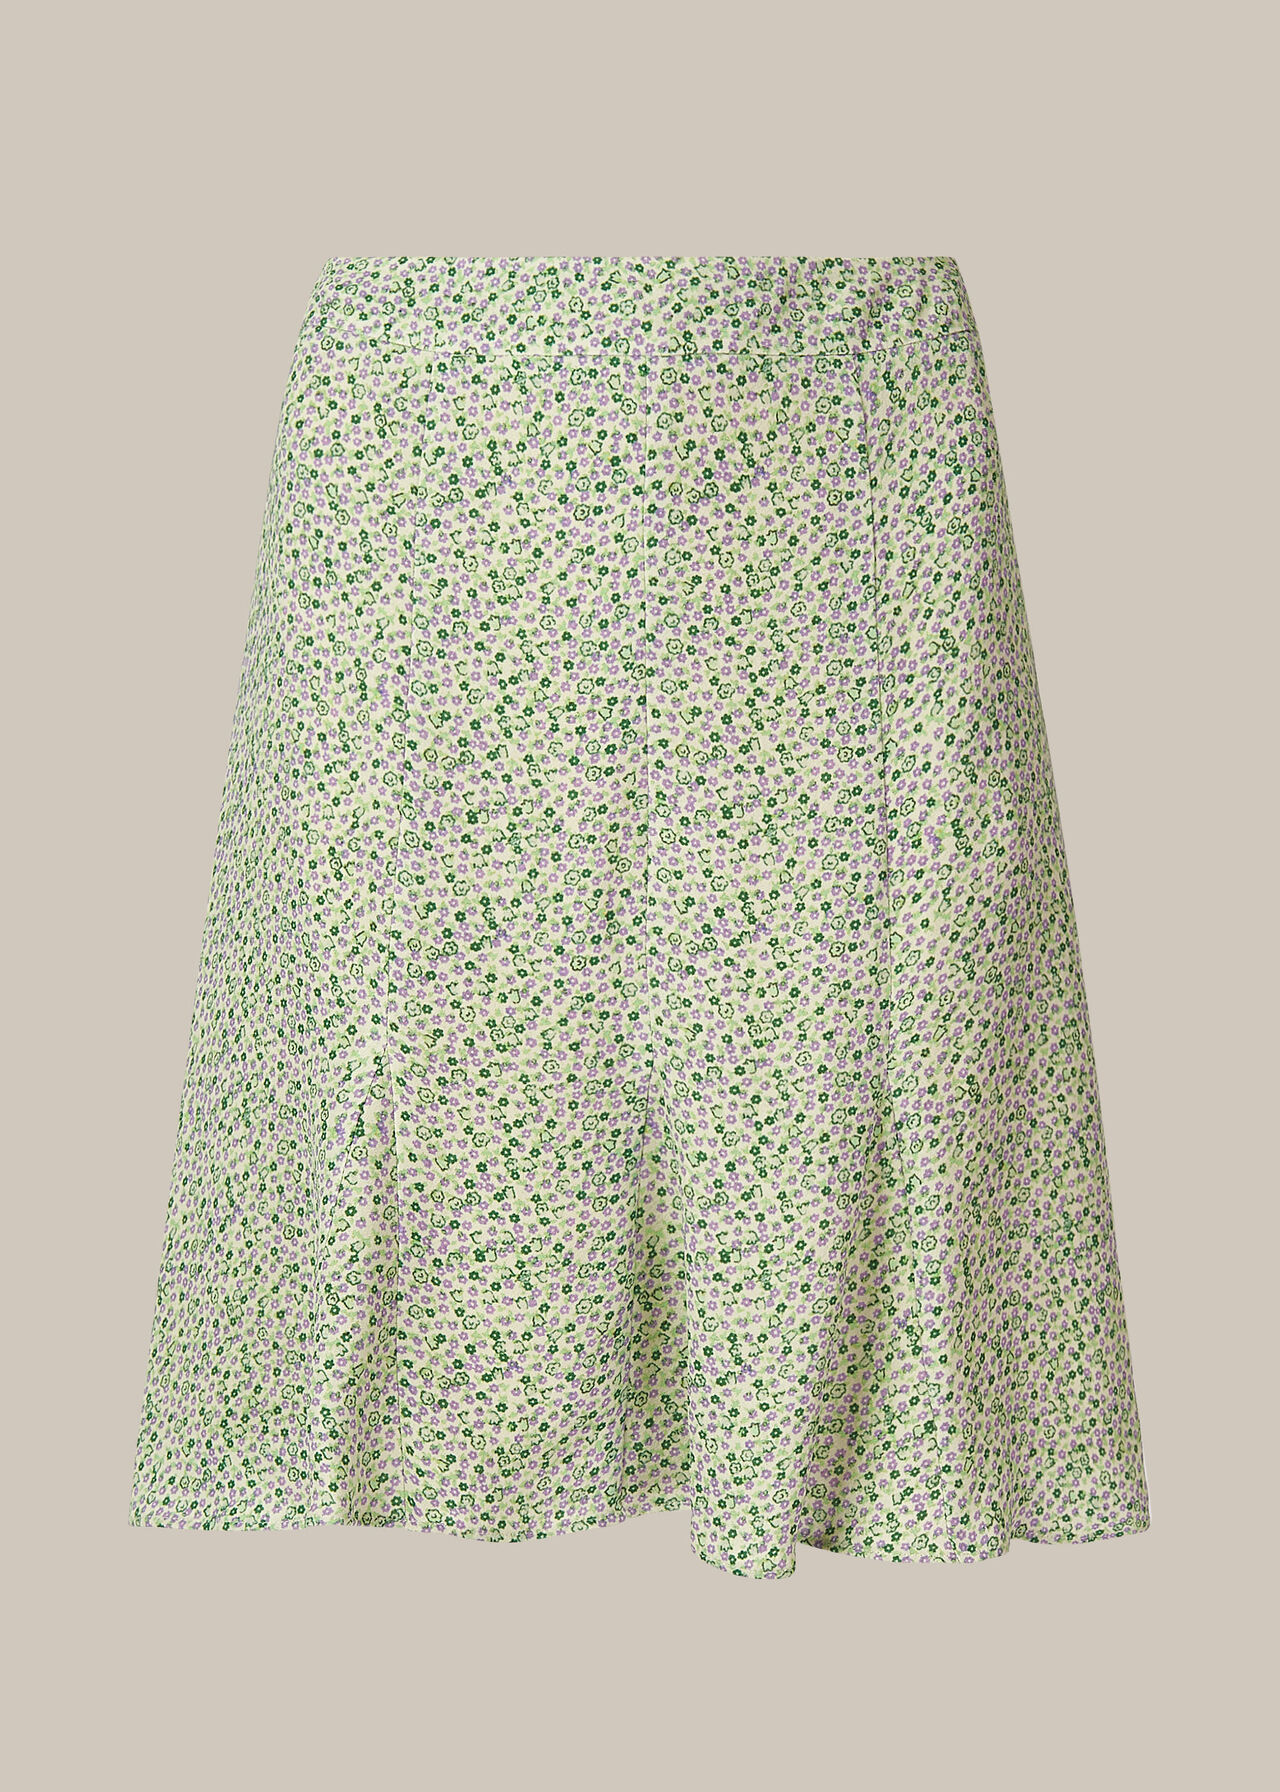 English Garden Flippy Skirt Green/Multi